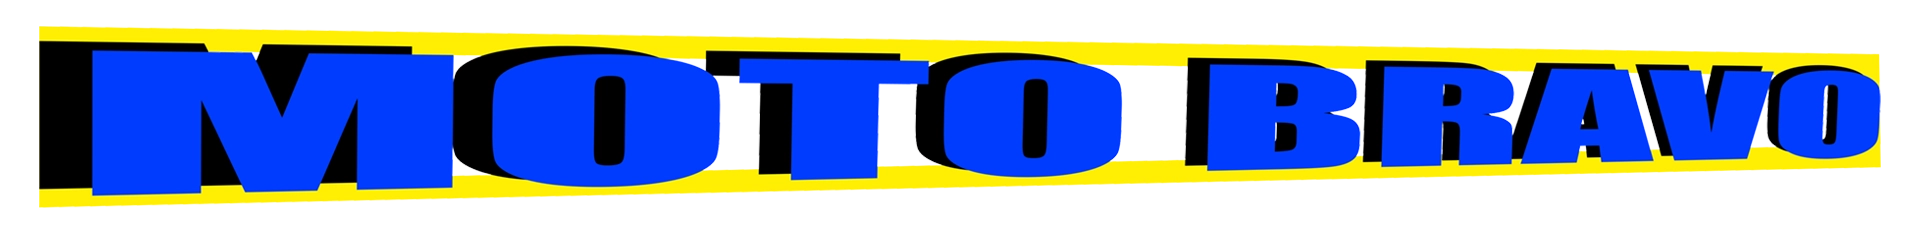 Moto-Bravo - logo